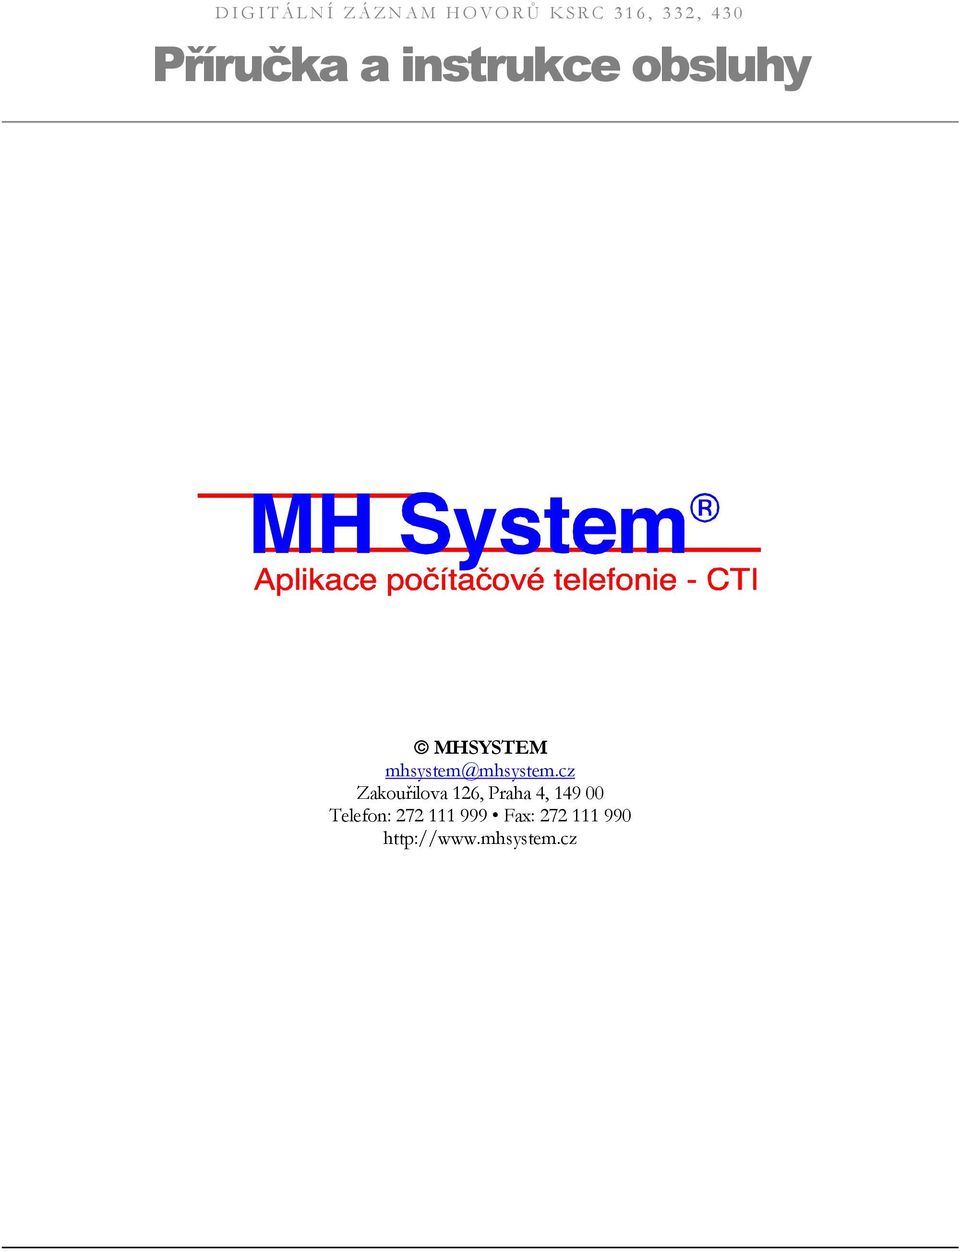 MHSYSTEM mhsystem@mhsystem.